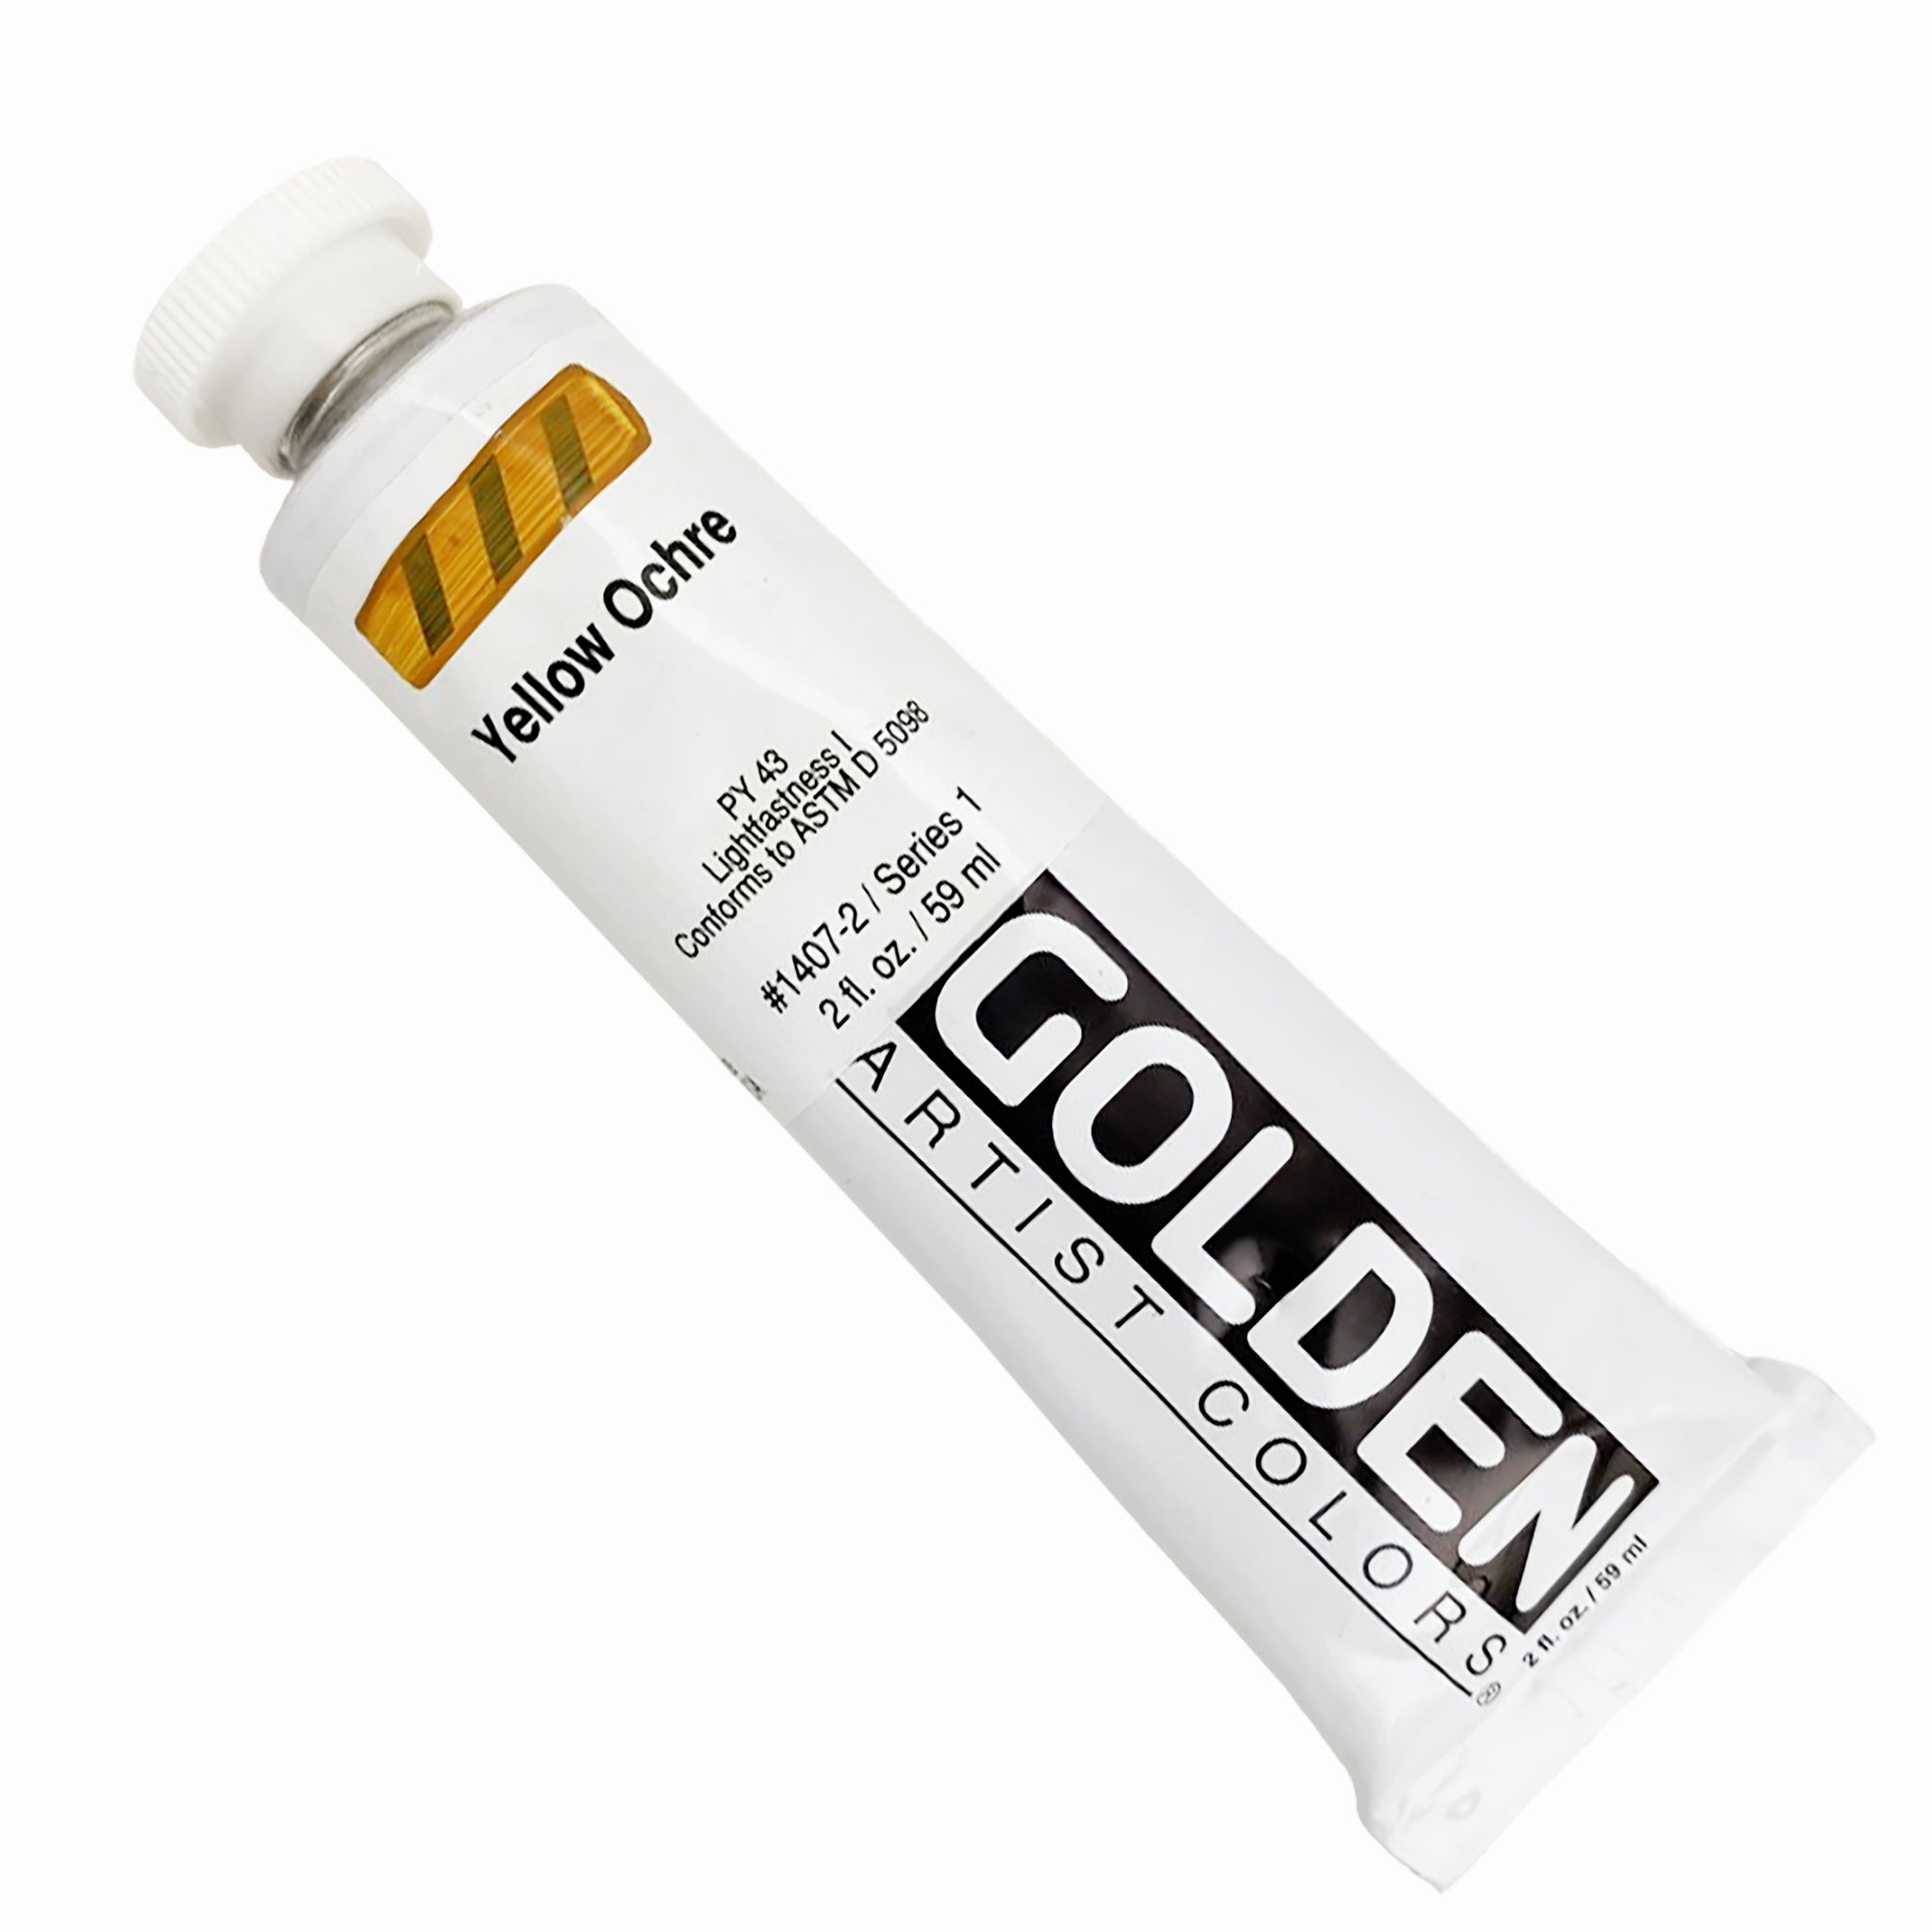 Golden : Heavy Body : Acrylic Paint : 59ml (2oz): Gold Fine Iridescent